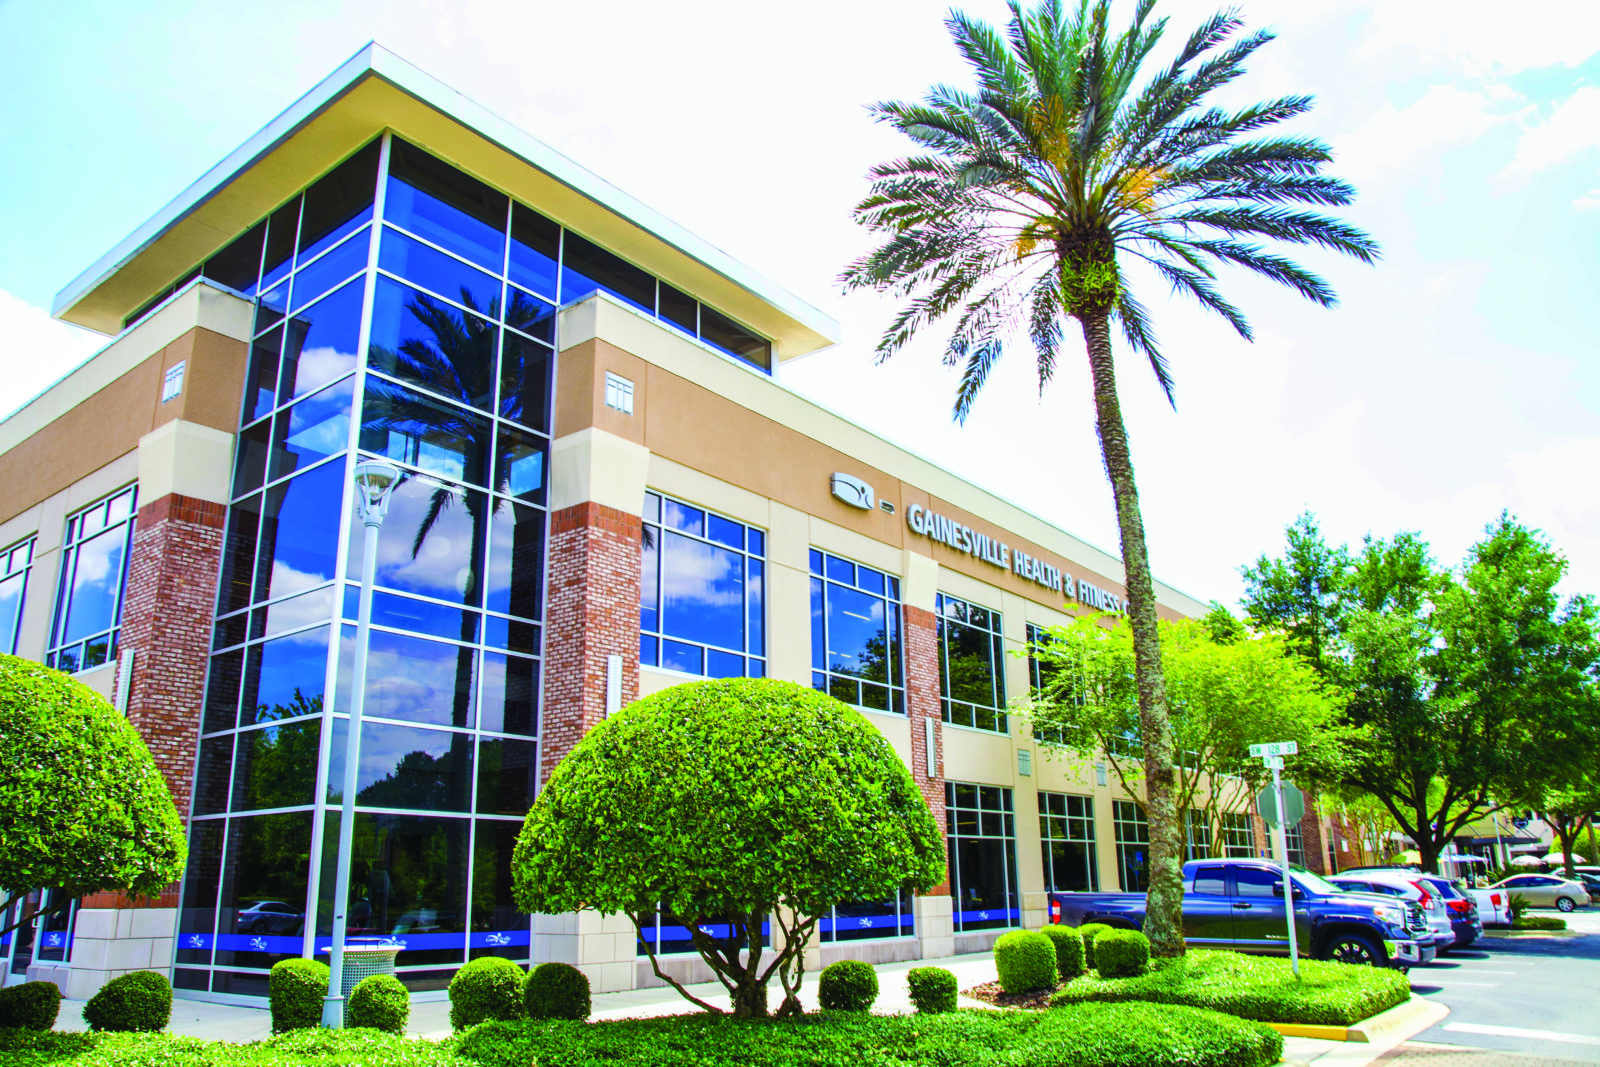 Gainesville Health & Fitness Center